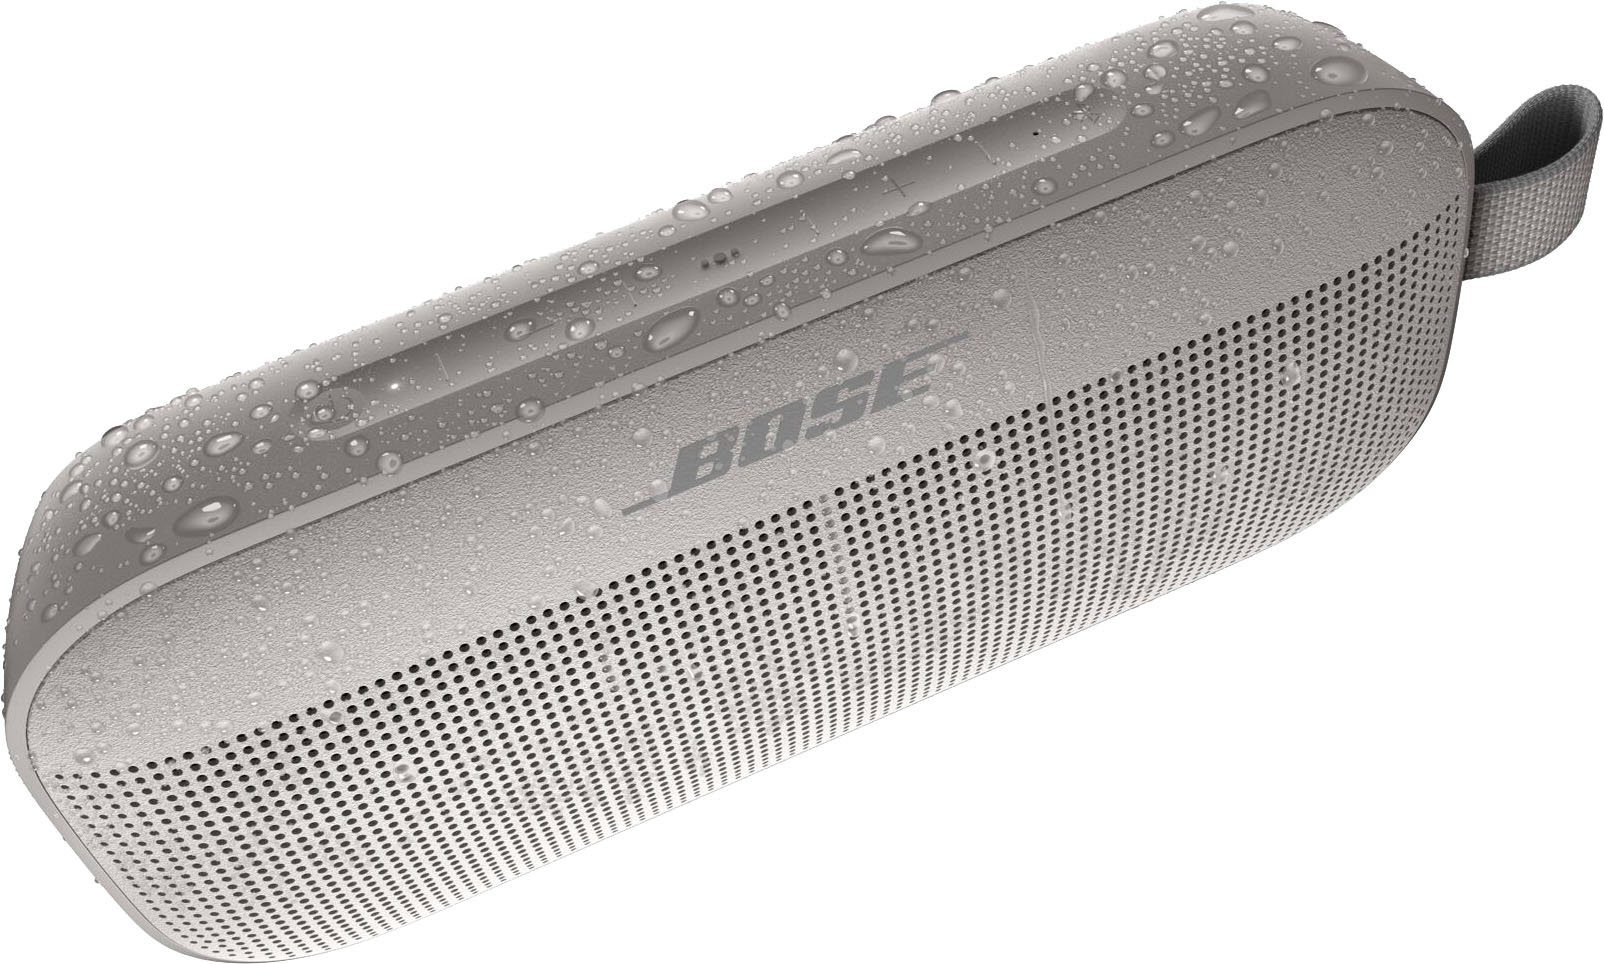 Lautsprecher (Bluetooth) SoundLink Stereo Bose Flex weiß